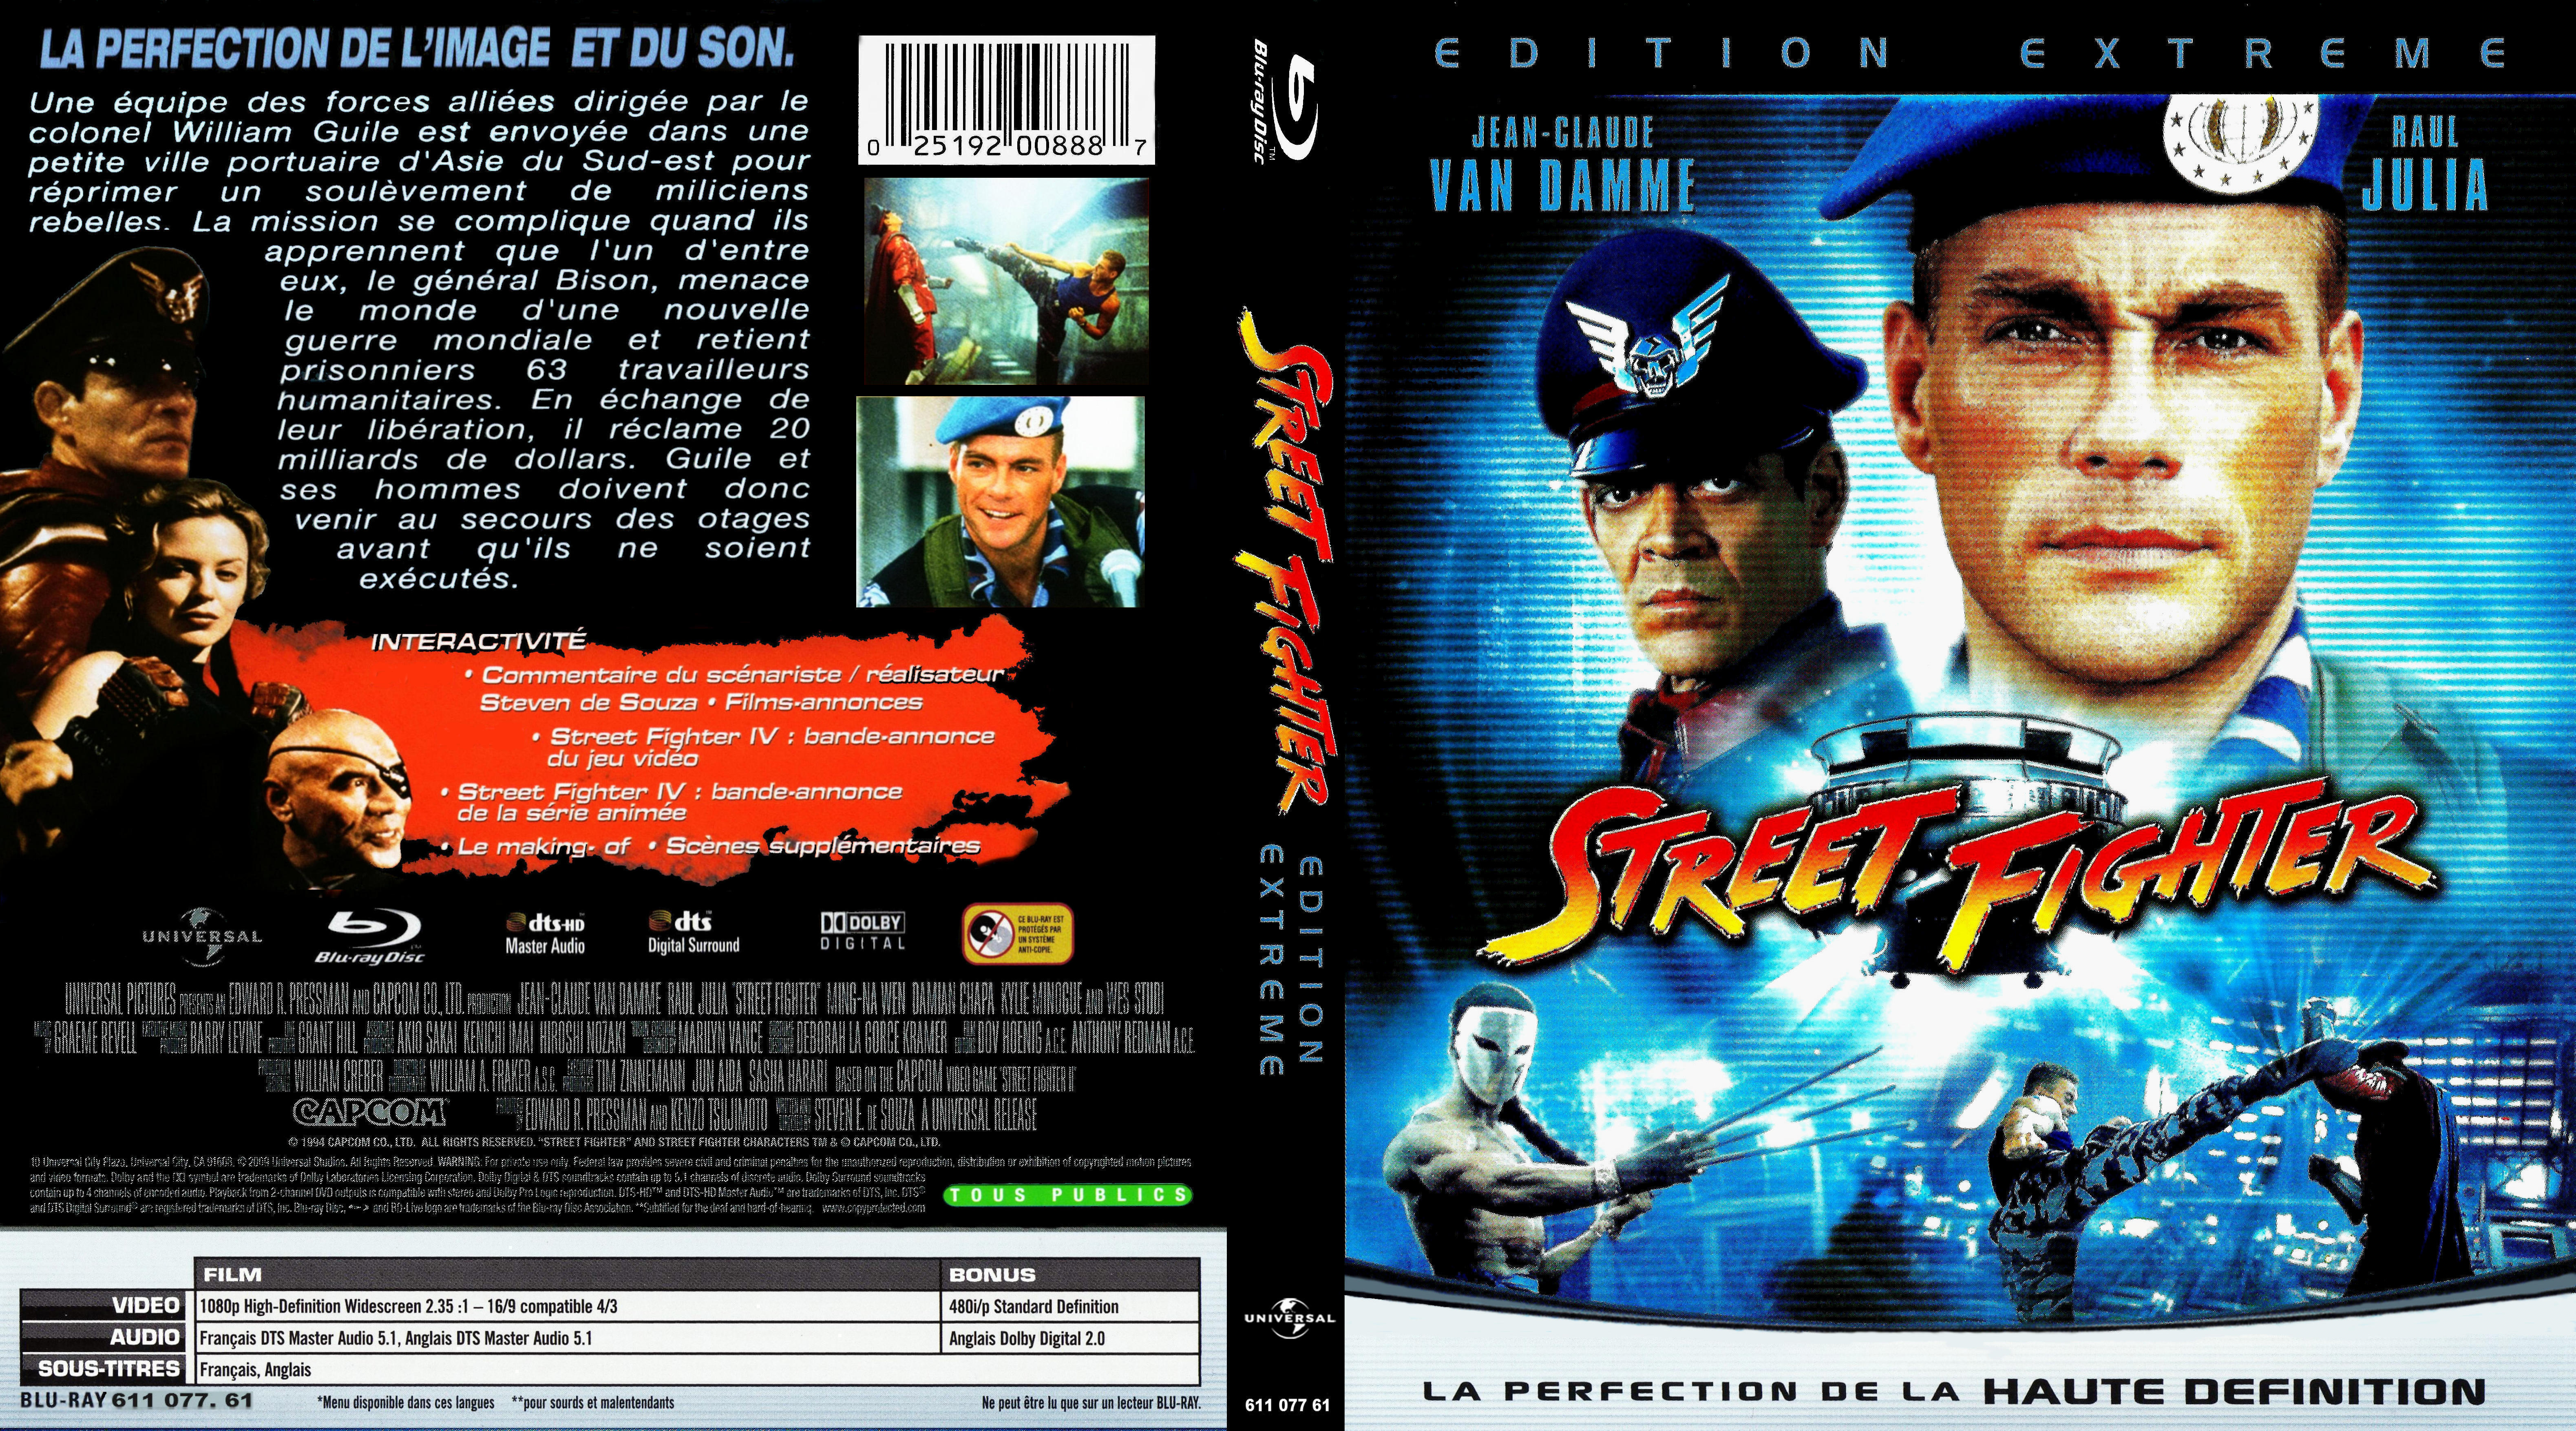 Jaquette DVD Street fighter custom (BLU-RAY)